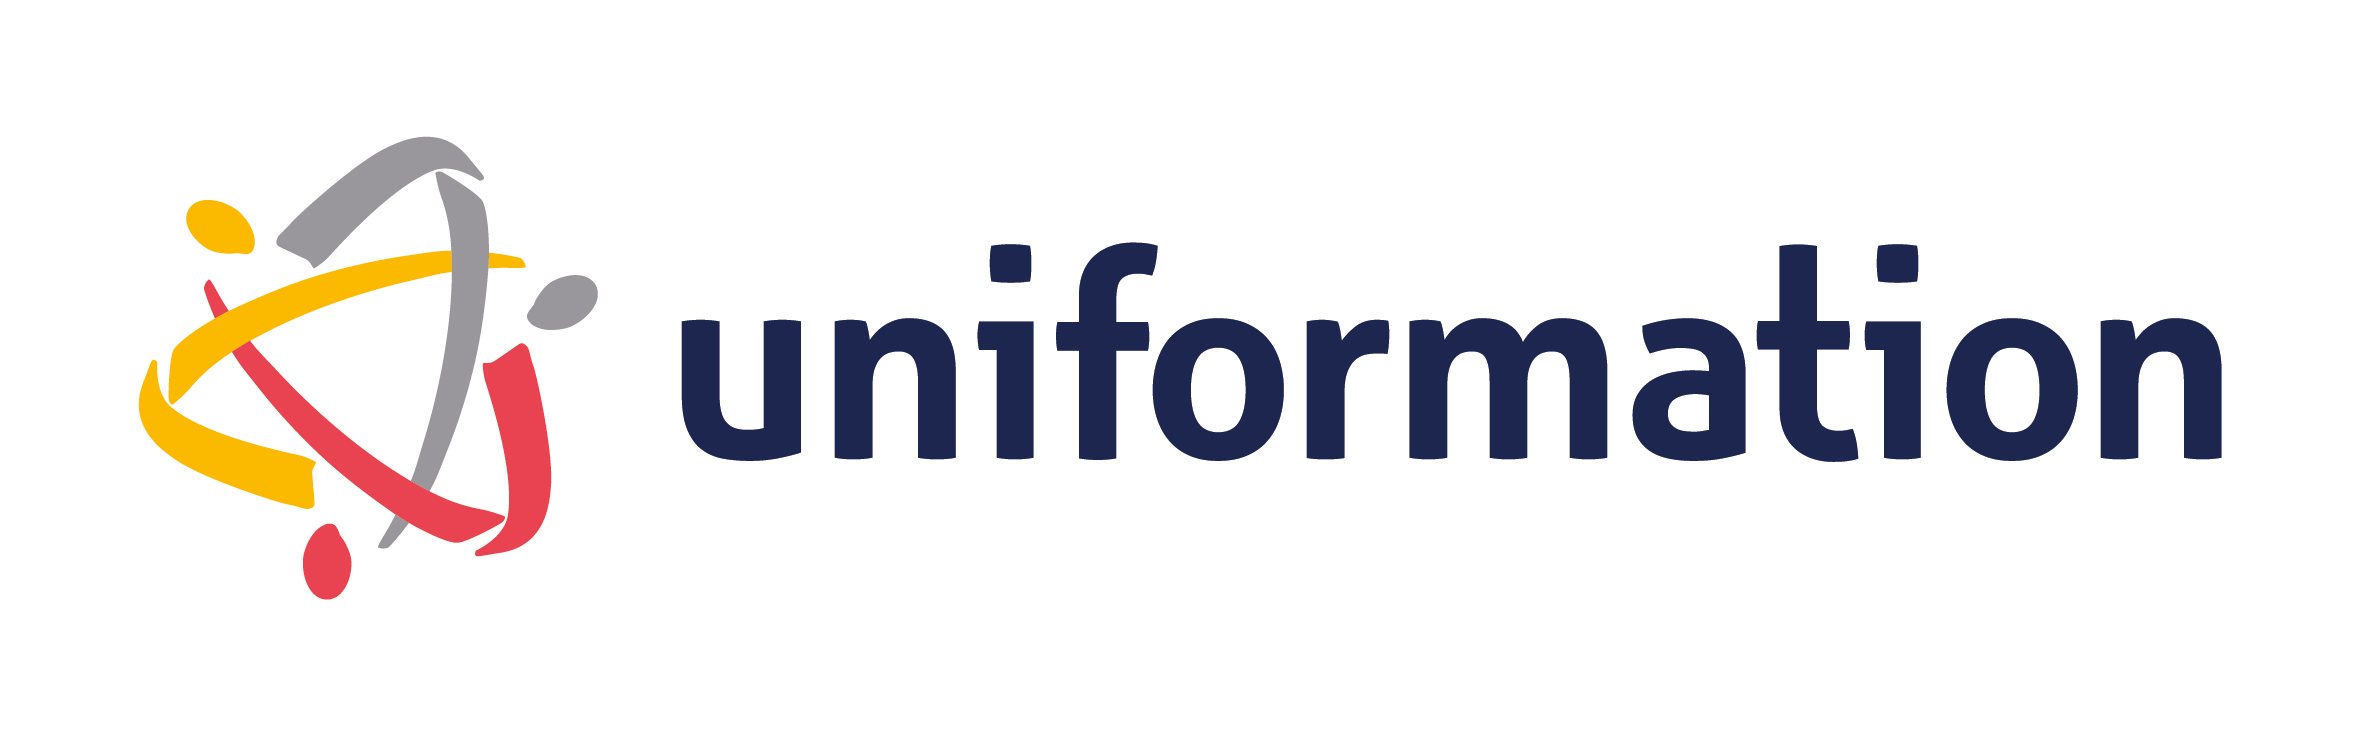 uniformation-logo